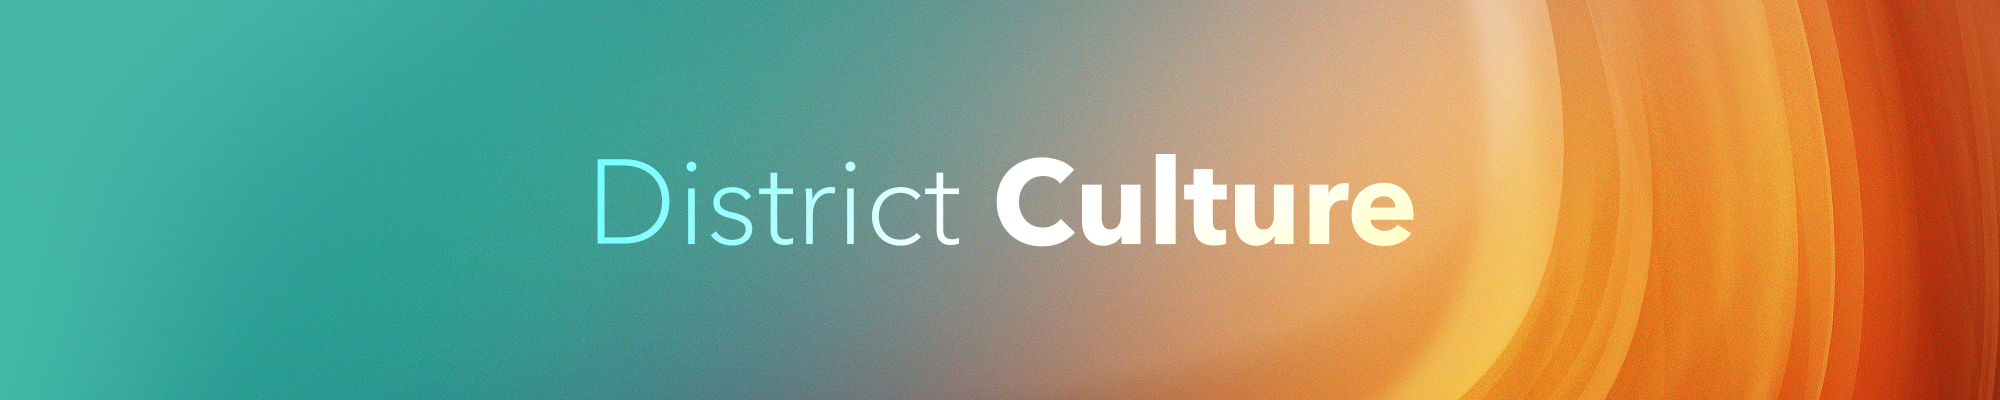 District Culture Title Header